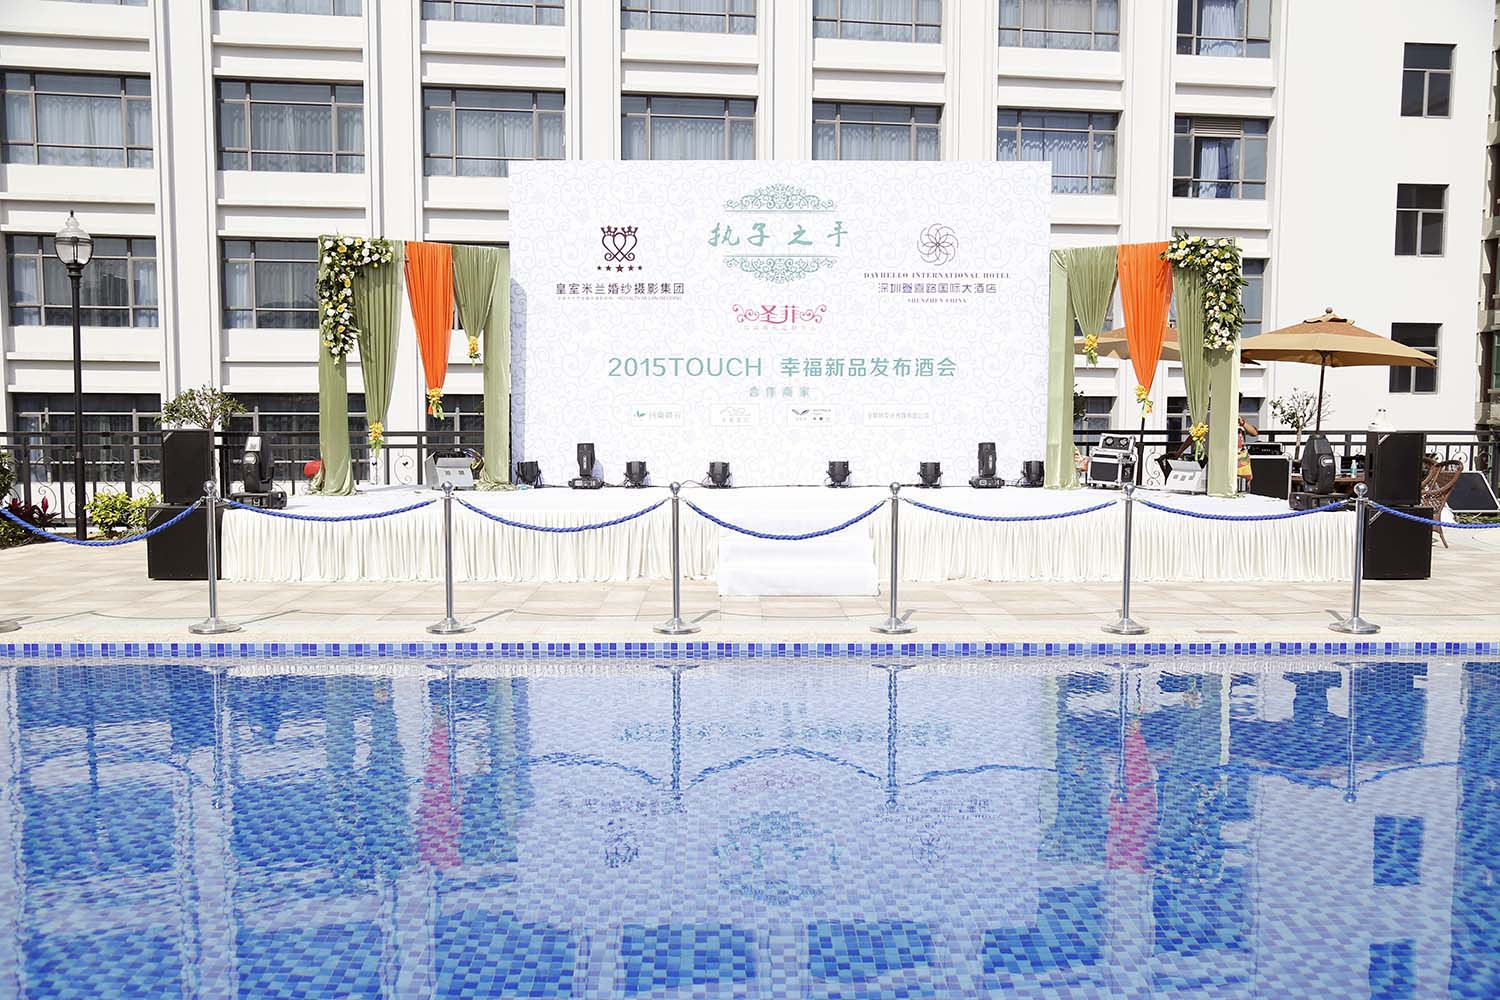 Dayhello international hotel air garden swimming pool debut - gorgeous wedding show